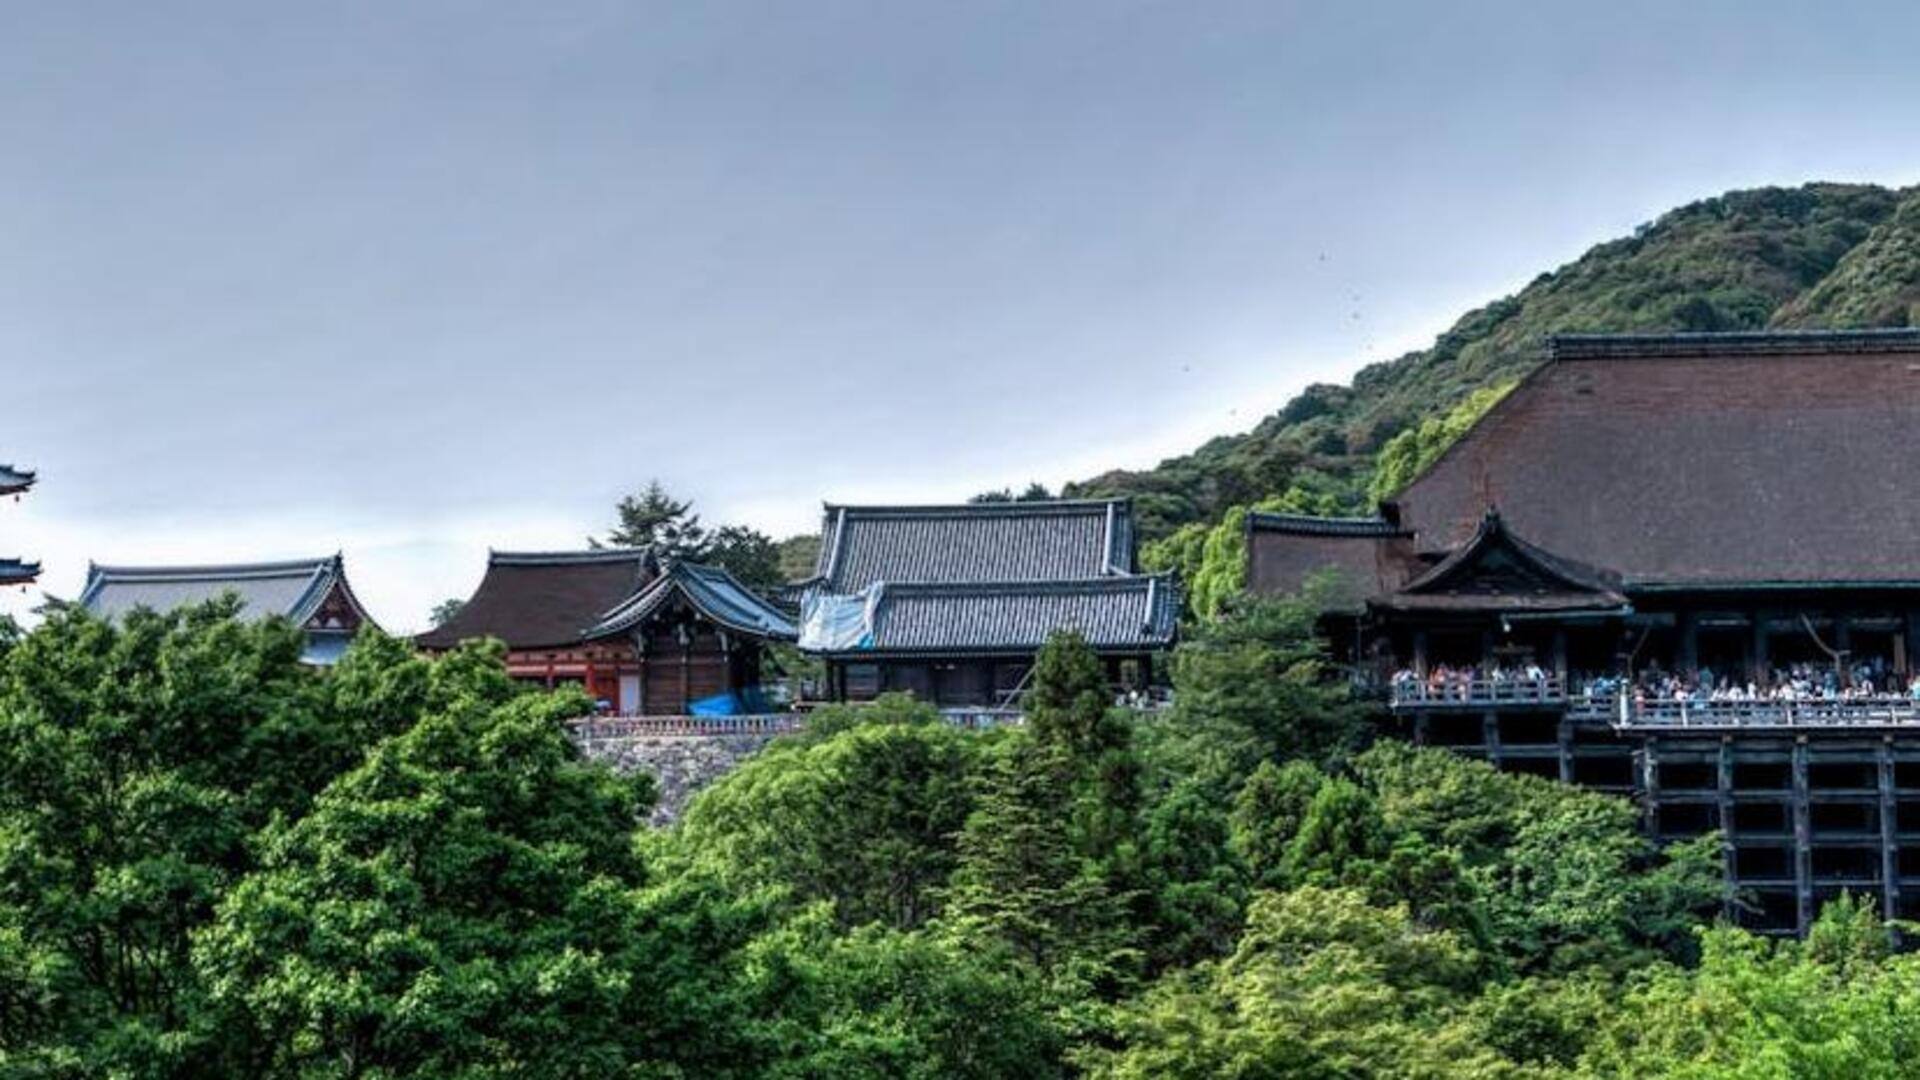 How to plan a spiritual trip to Kyoto, Japan